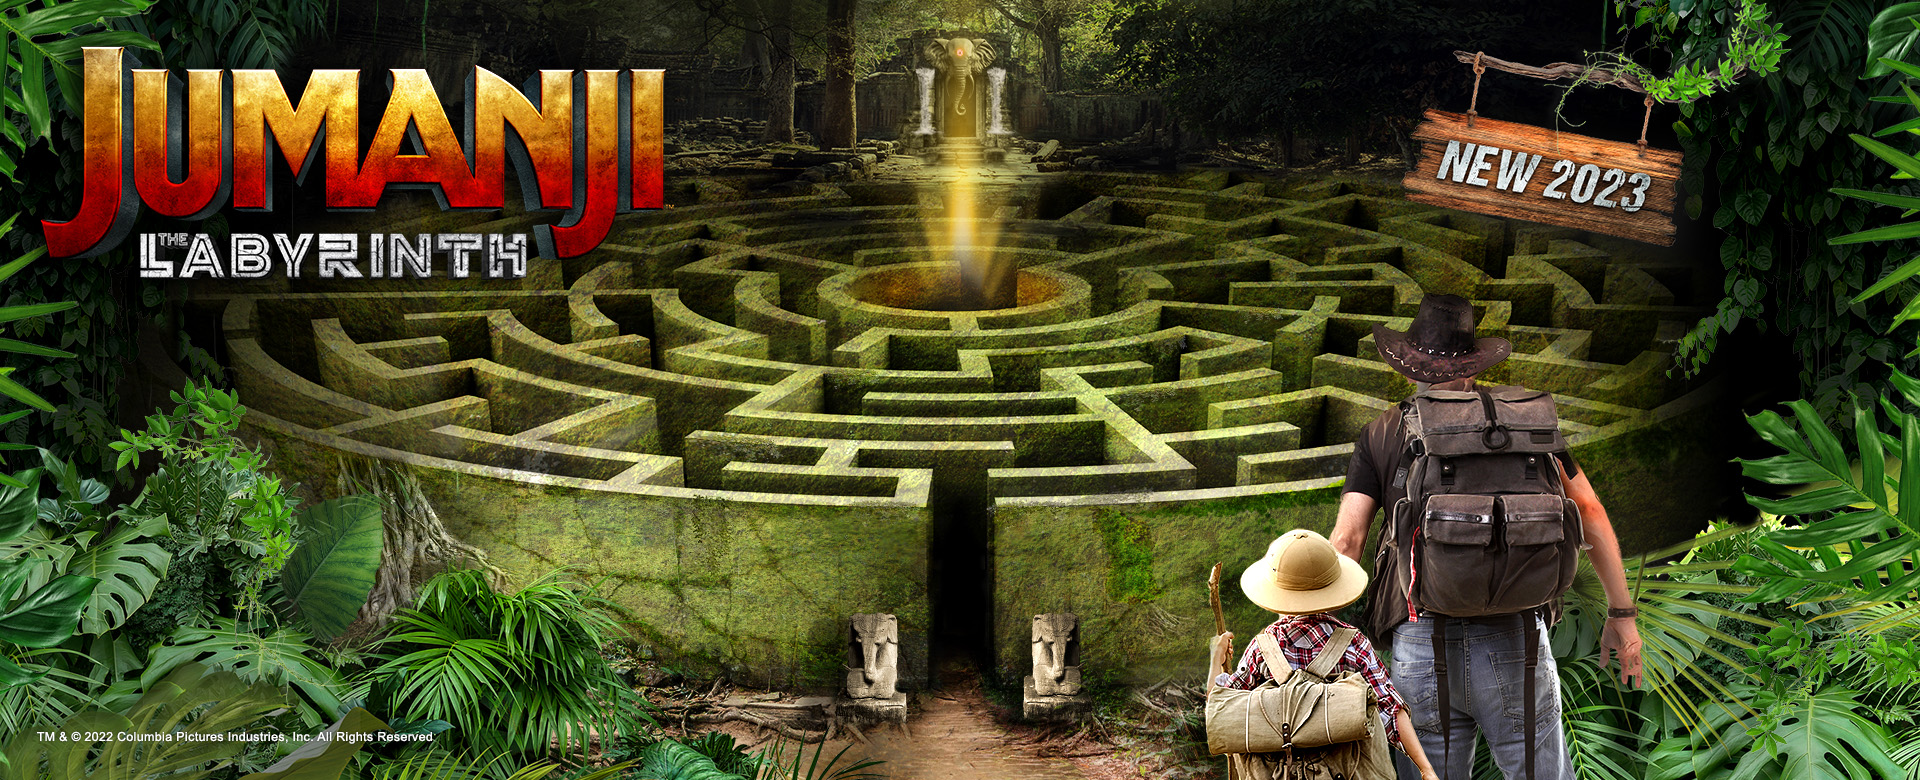 Jumanji - The labyrinth